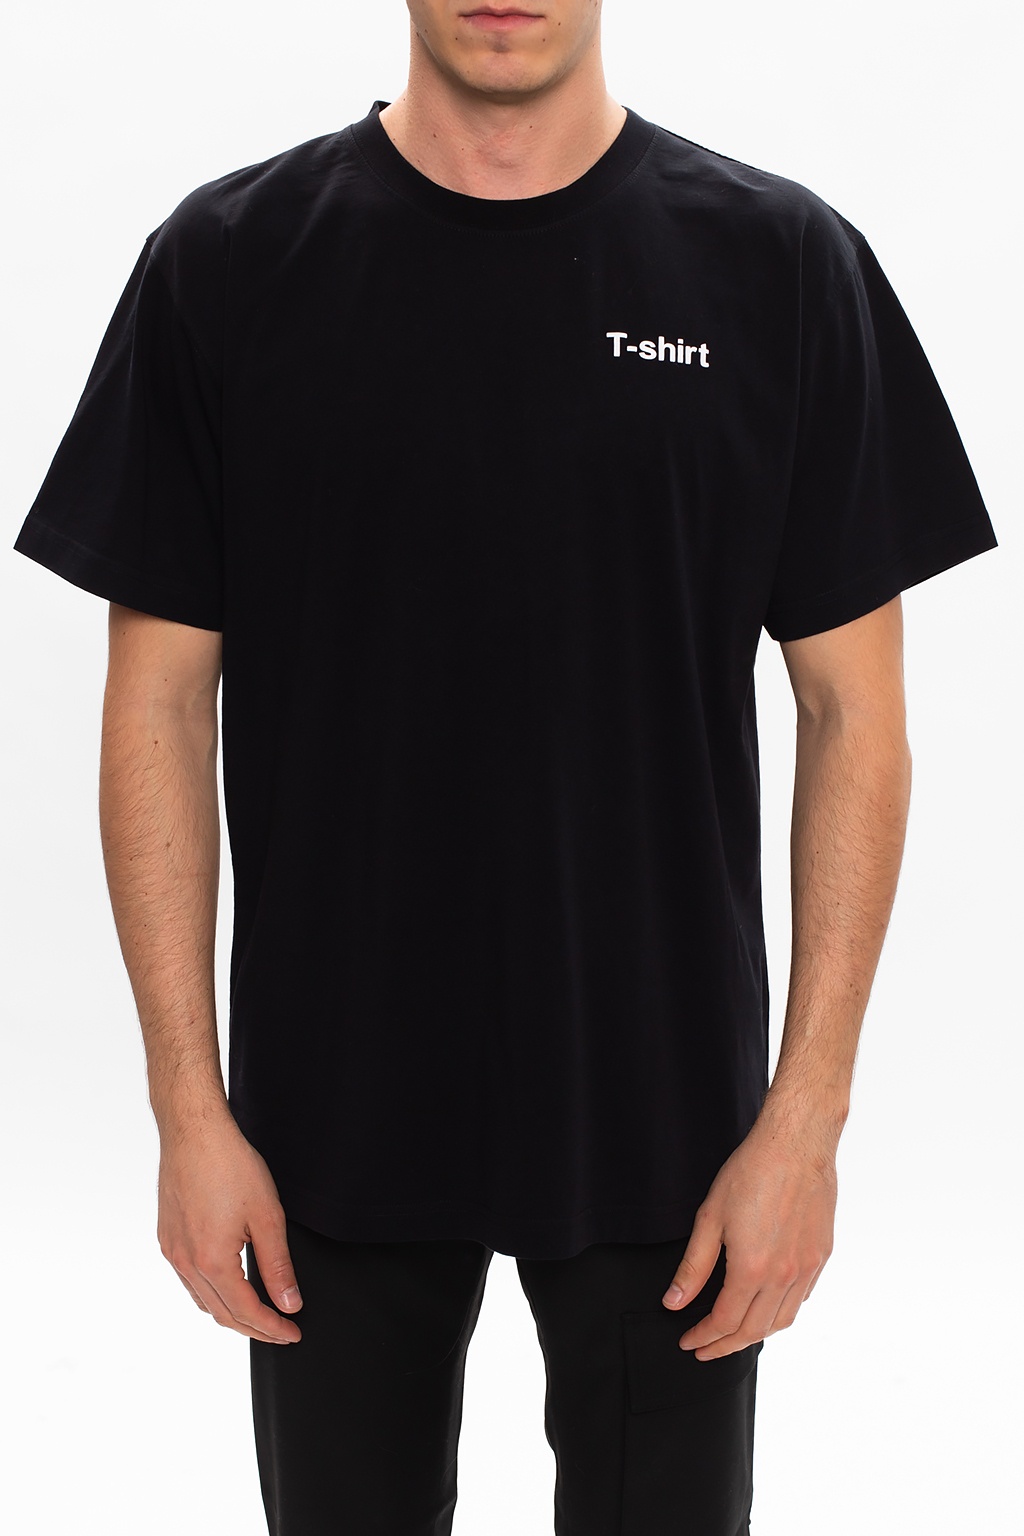 shirt VETEMENTS - IetpShops Brust Jeans Slovenia der Black Shirt mit Logo Pepe - Atea T in T- auf - Rot Printed